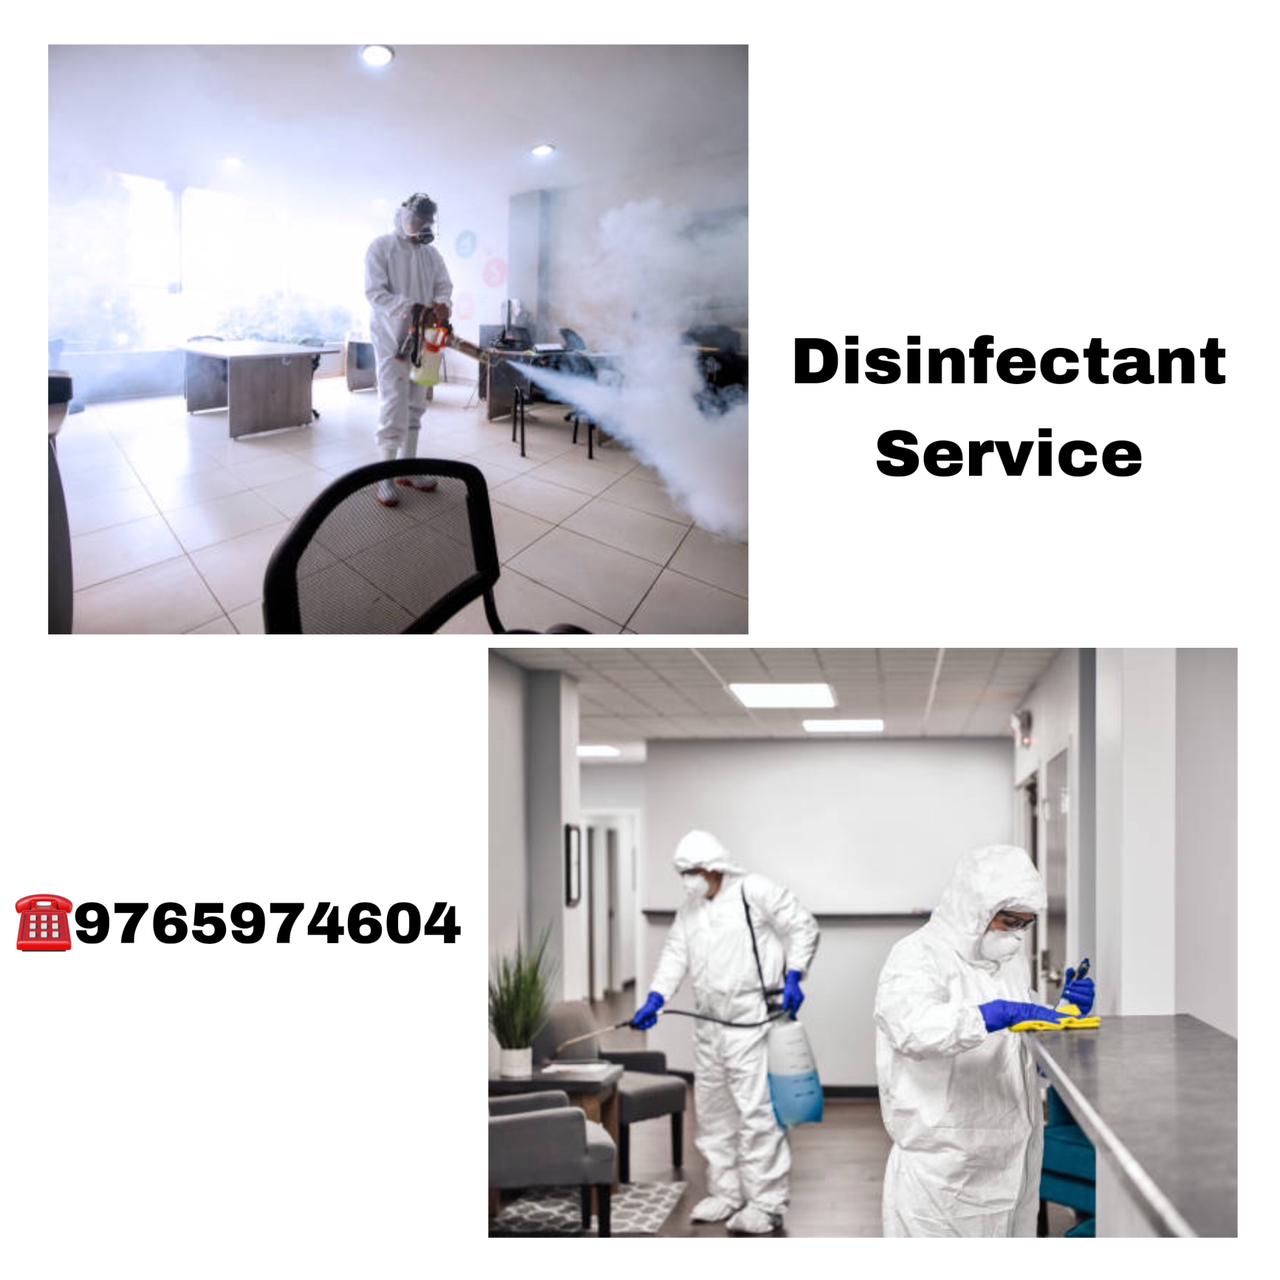 professional disinfectant service in Kathmandu